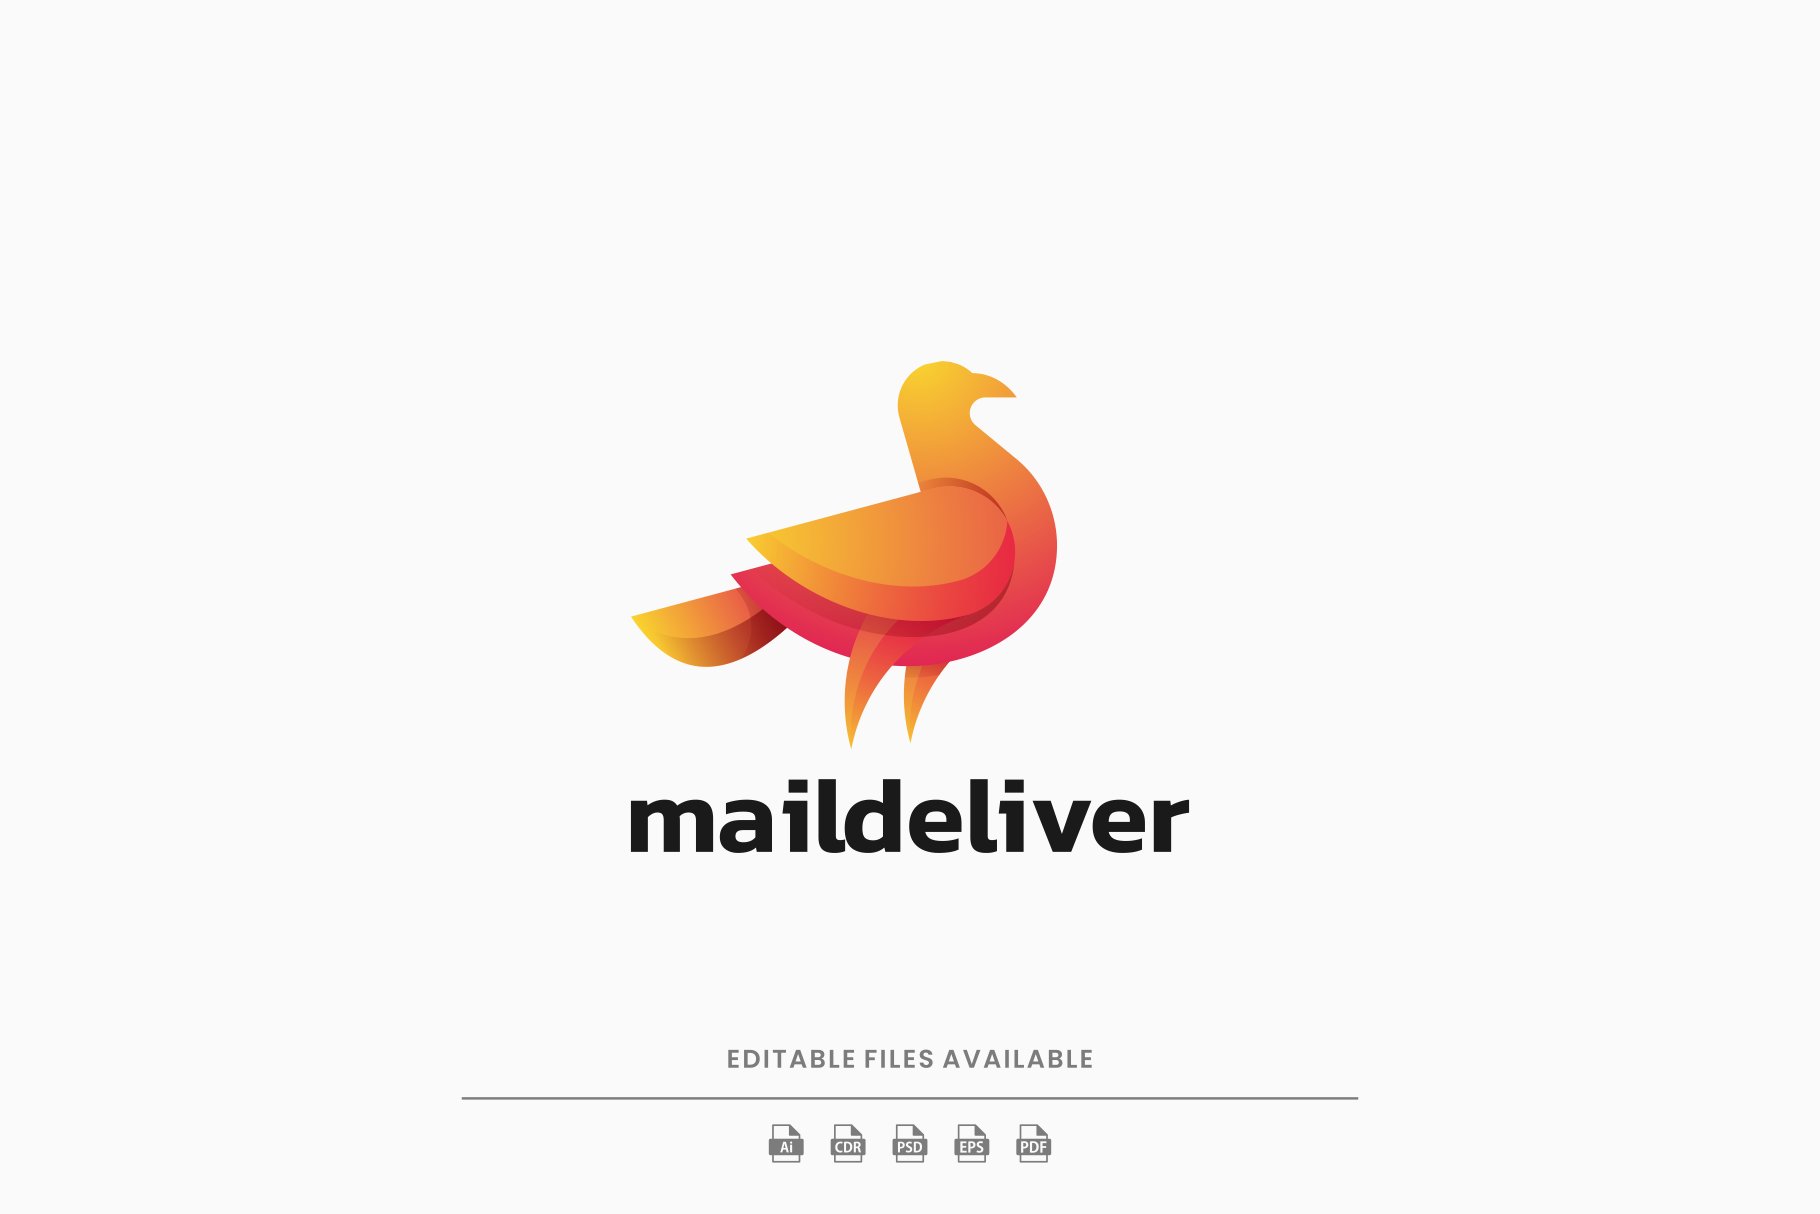 Pigeon Maildeliver Gradient Logo cover image.